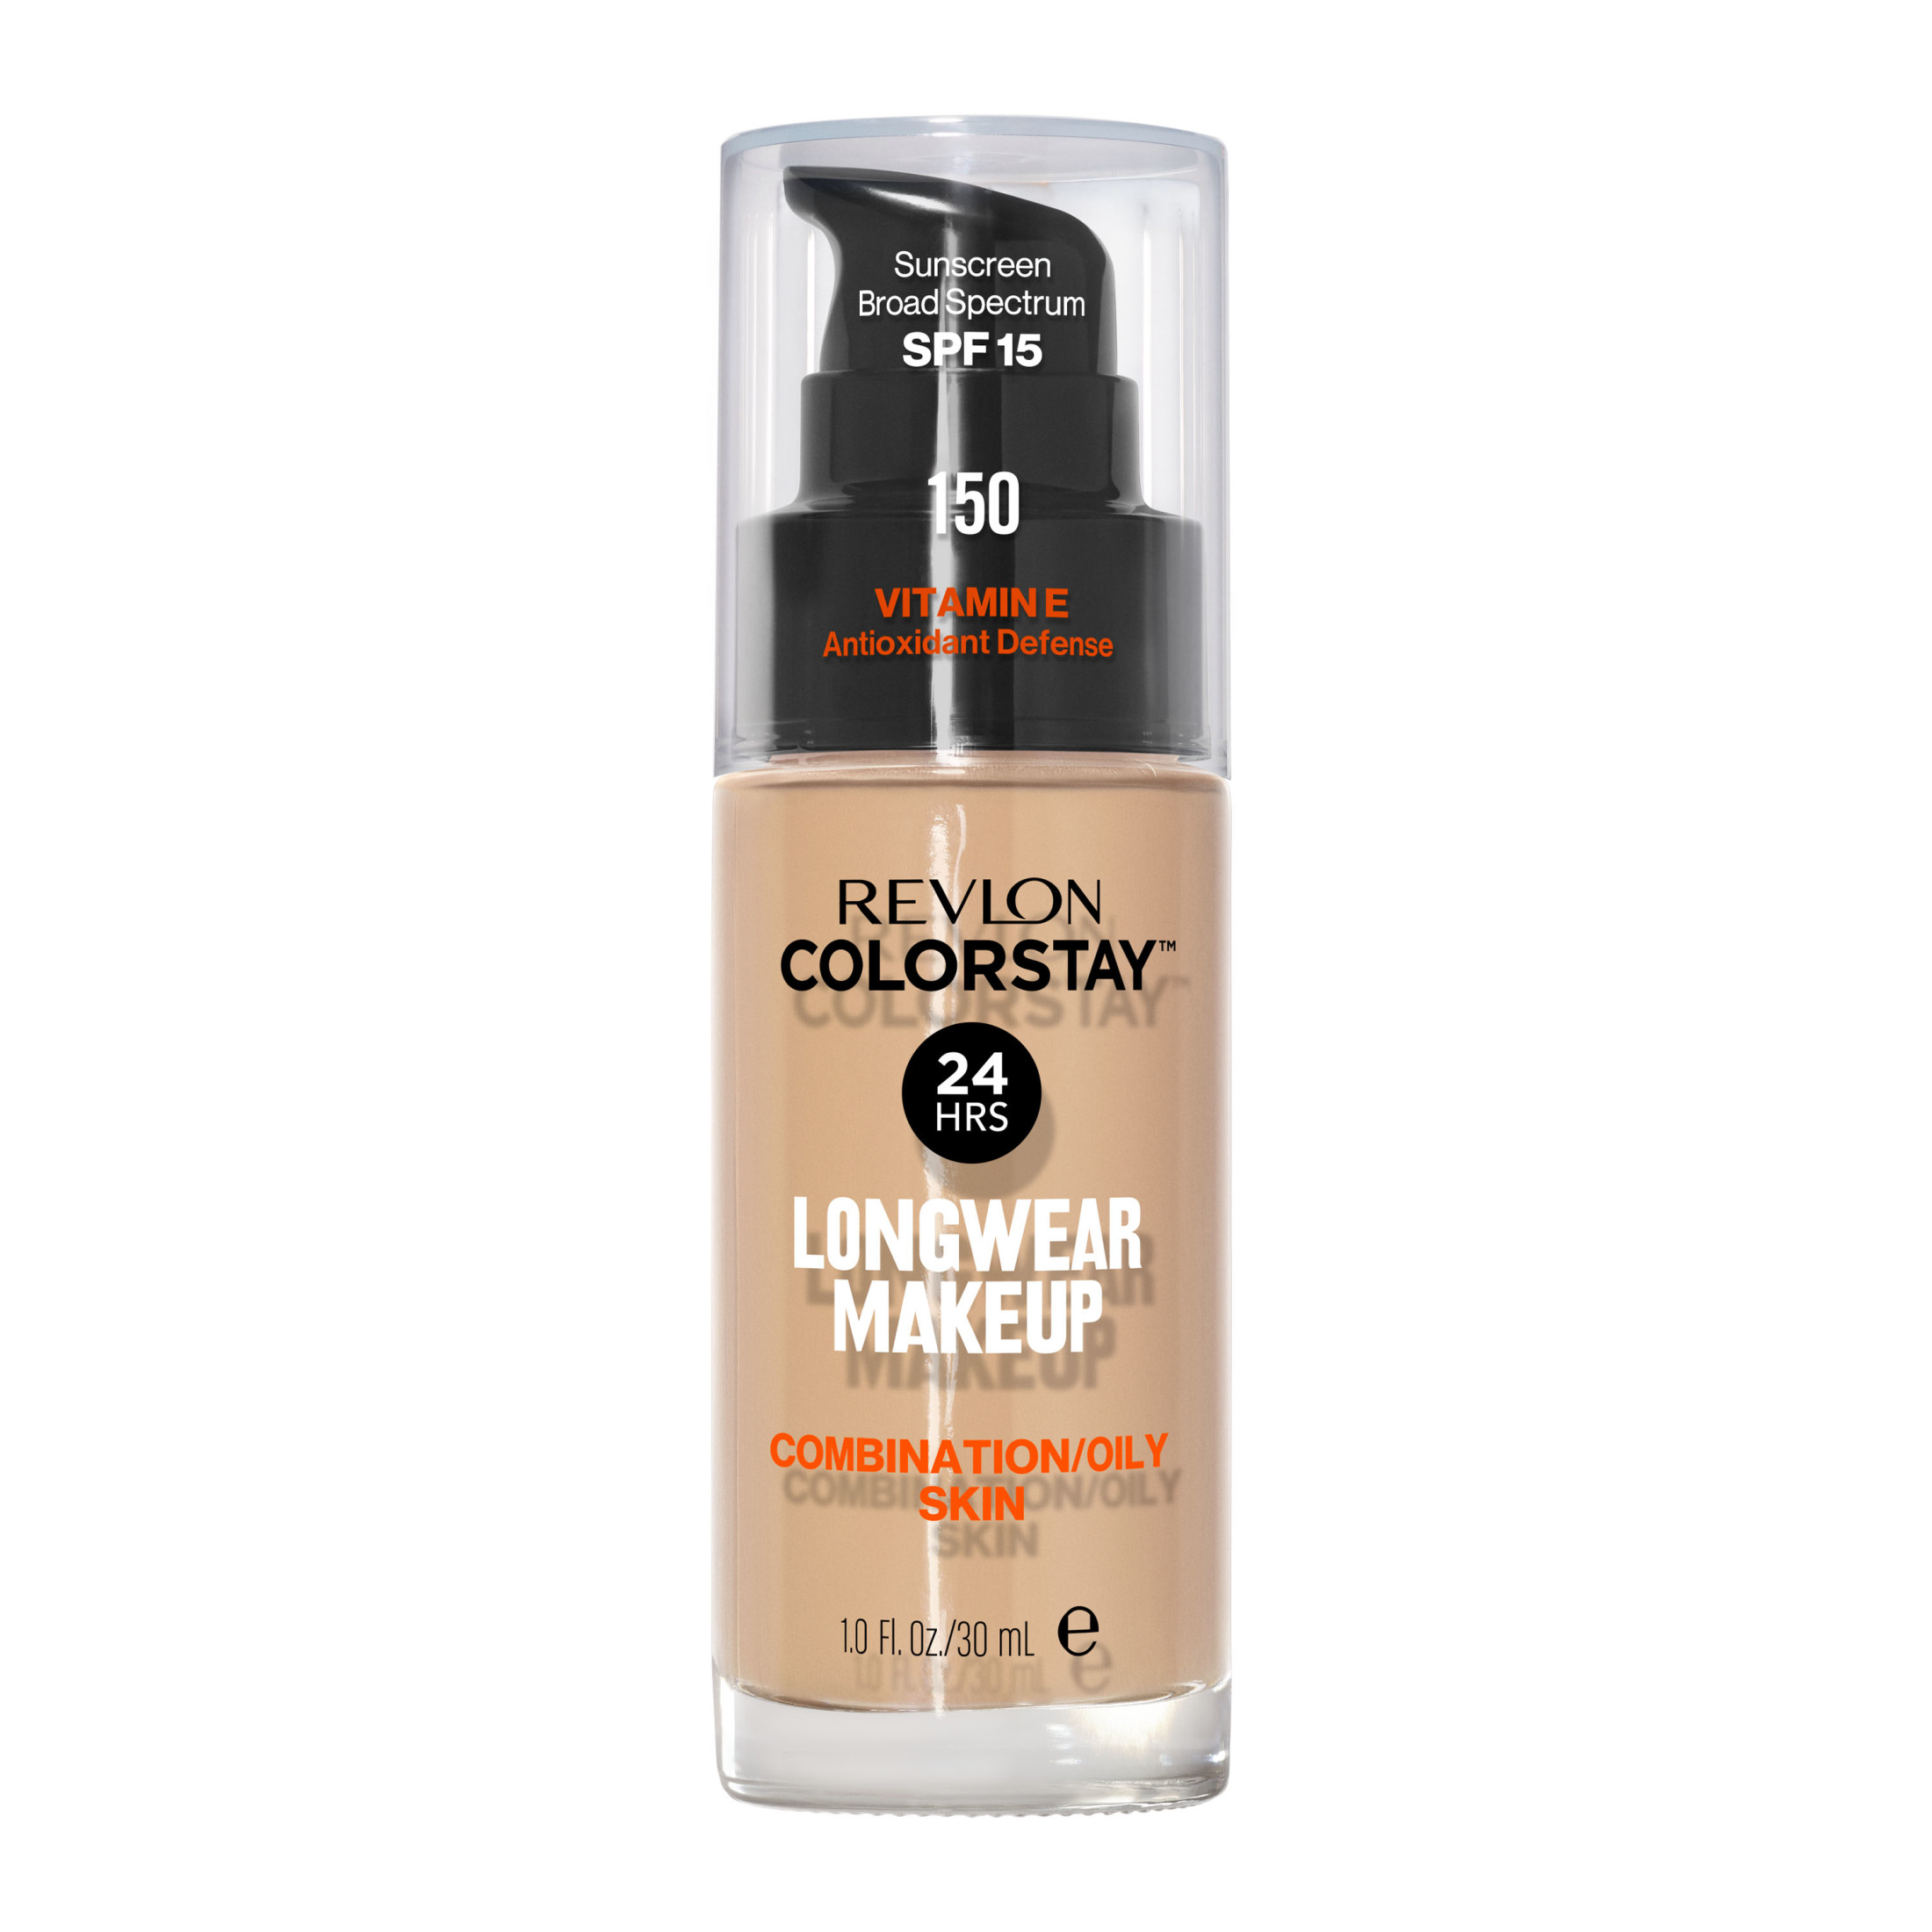 Revlon ColorStay Liquid Foundation Makeup, Matte Finish, Combination/Oily Skin, SPF 15, 150 Buff, 1 fl oz. - image 1 of 11